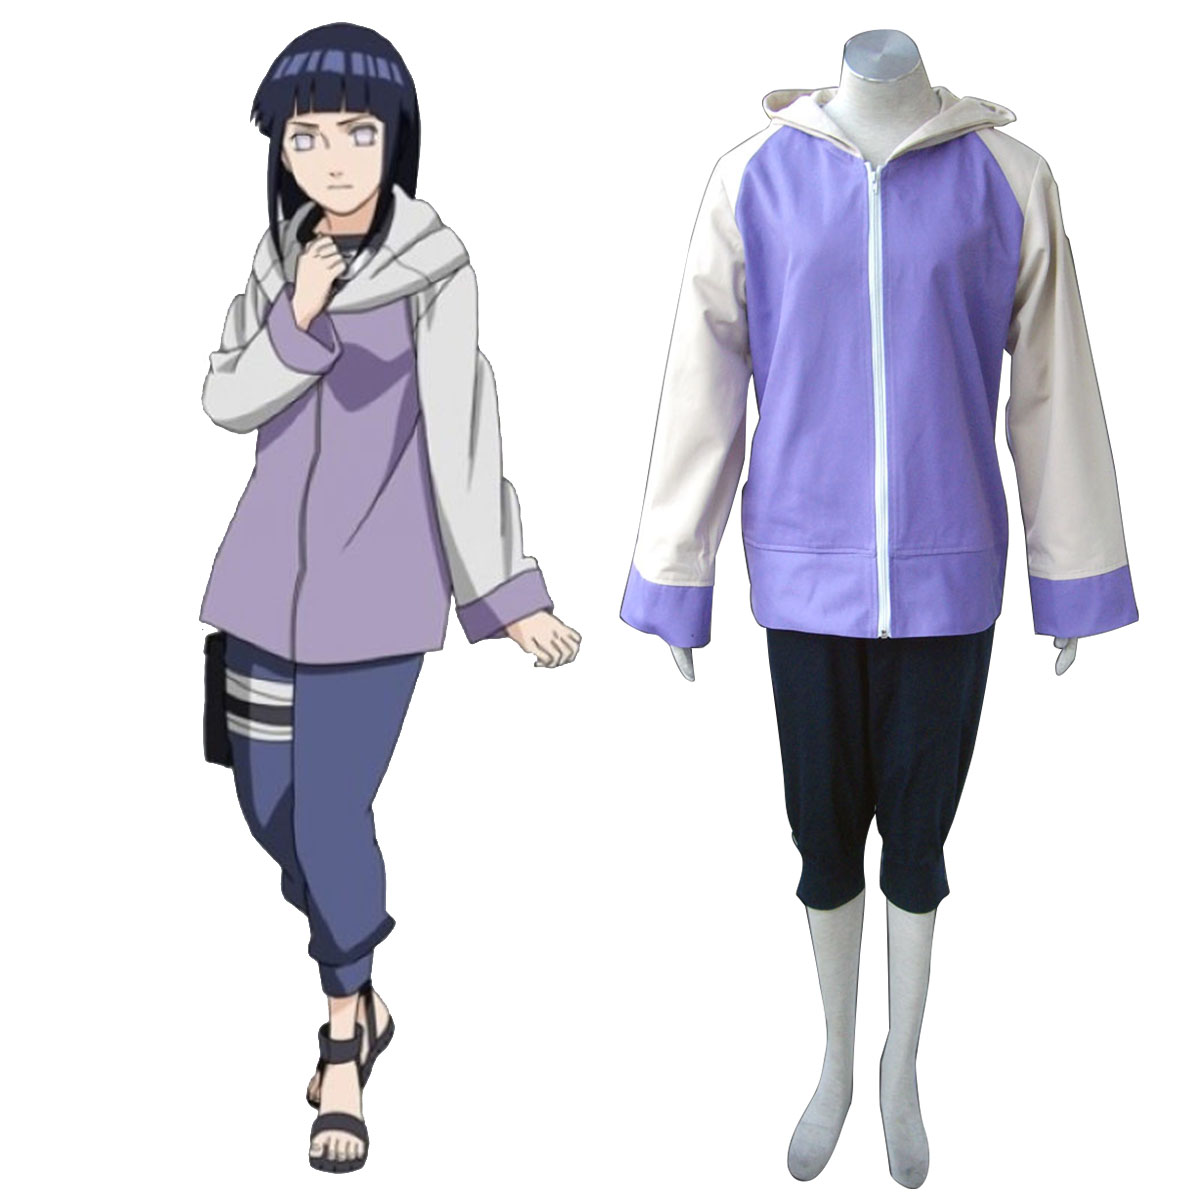 Naruto Shippuden Hinata Hyuga 2 Anime Cosplay Costumes Outfit